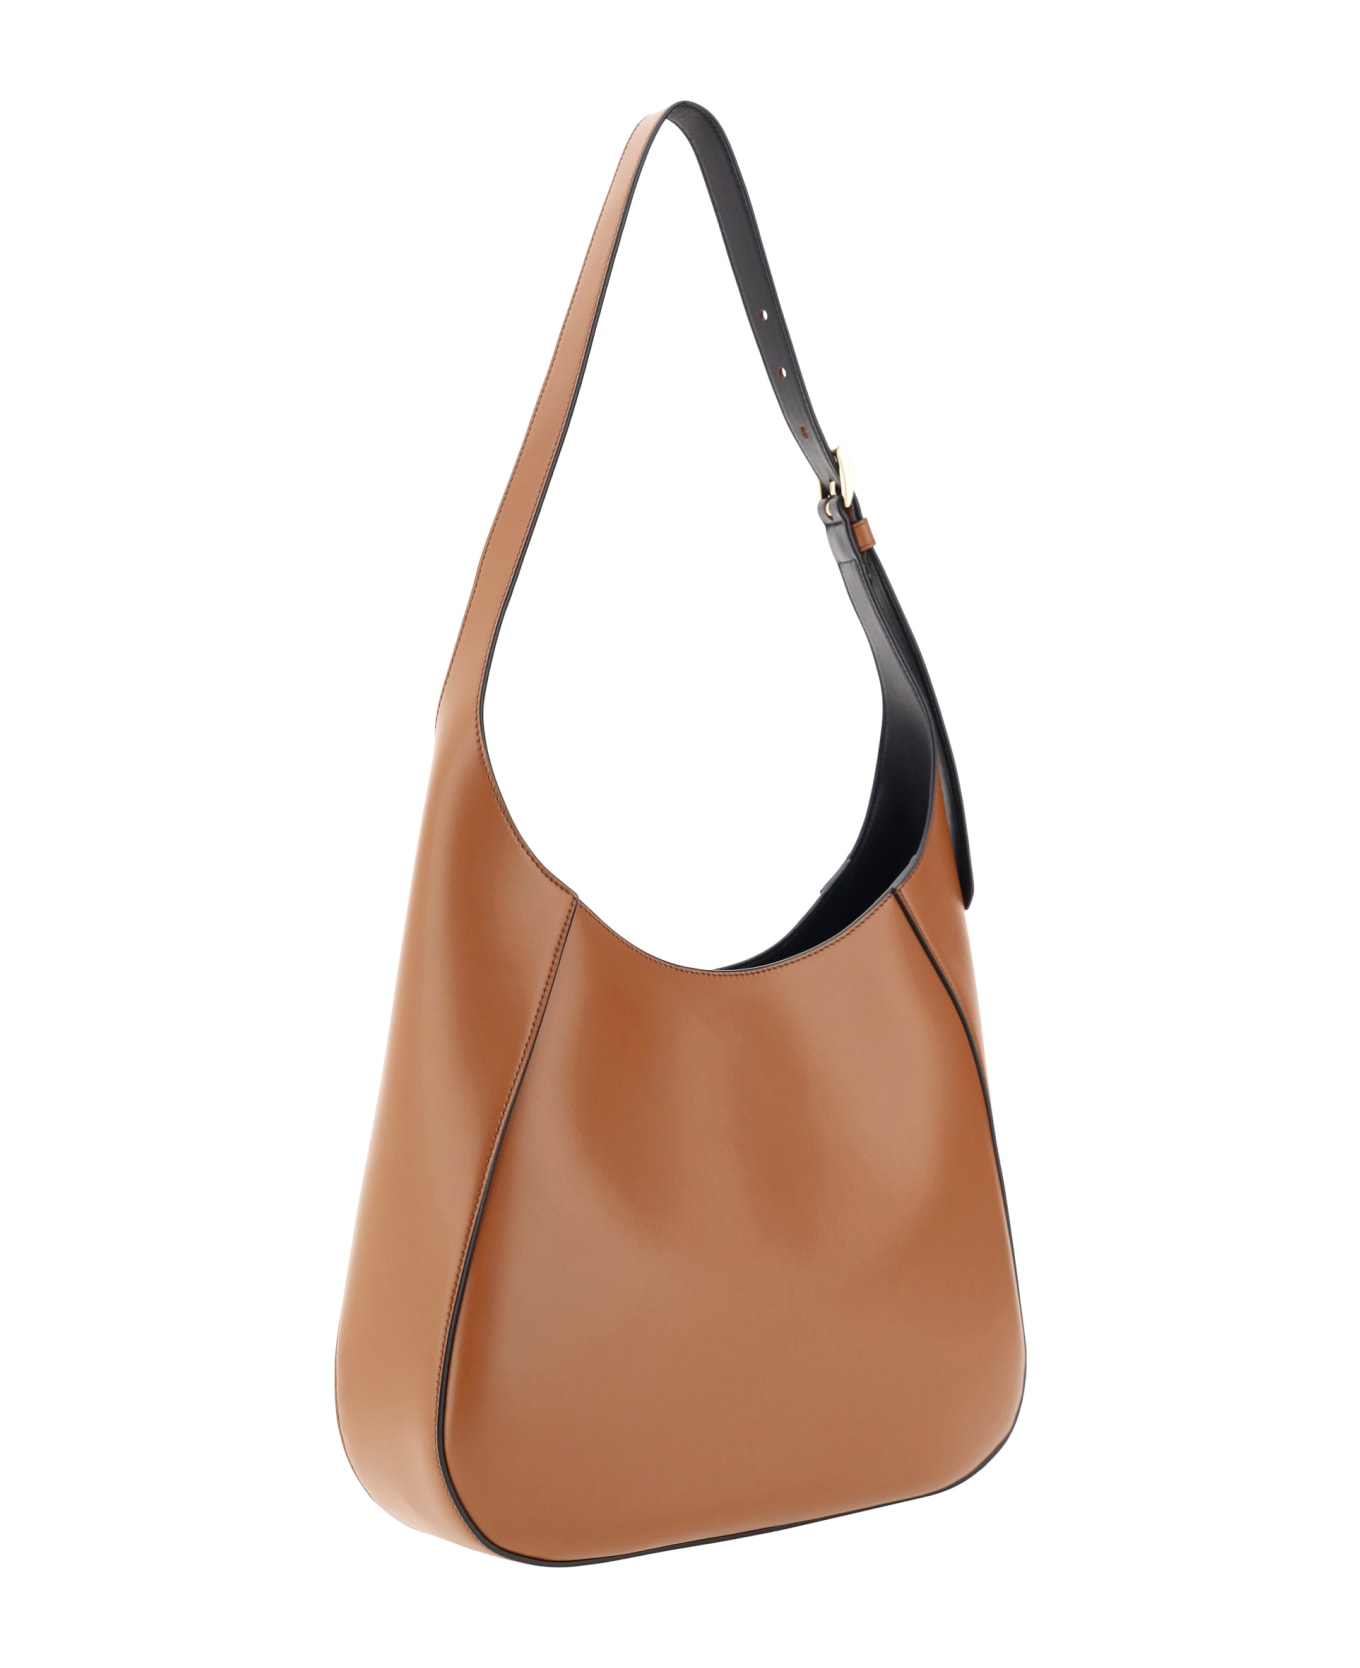 Prada Shoulder Bag - The Chanel Graffiti Backpack looks far more appropriate on